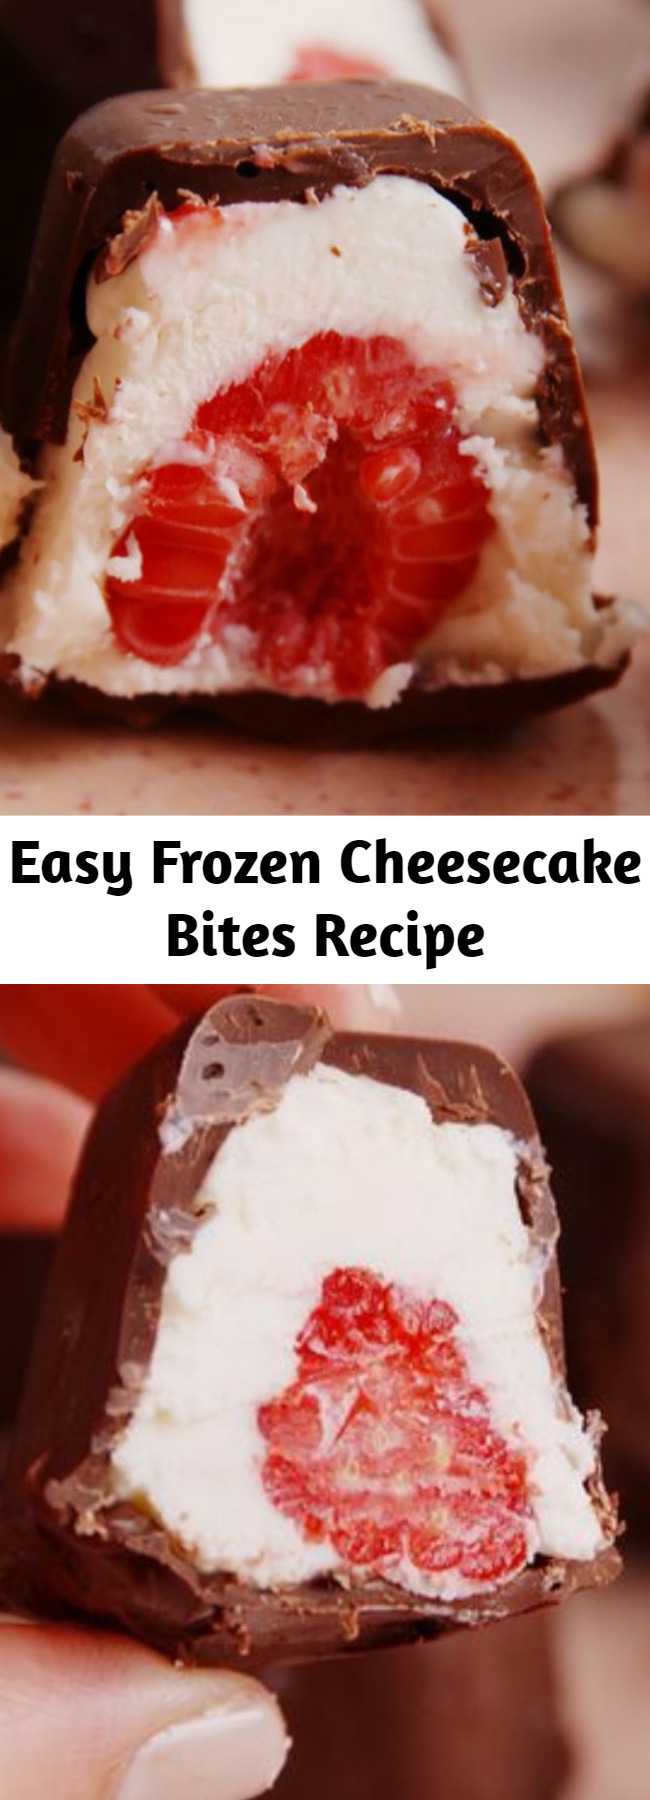 Easy Frozen Cheesecake Bites Recipe - We just found the cutest way to eat cheesecake. Cheesecake literally just got cooler.